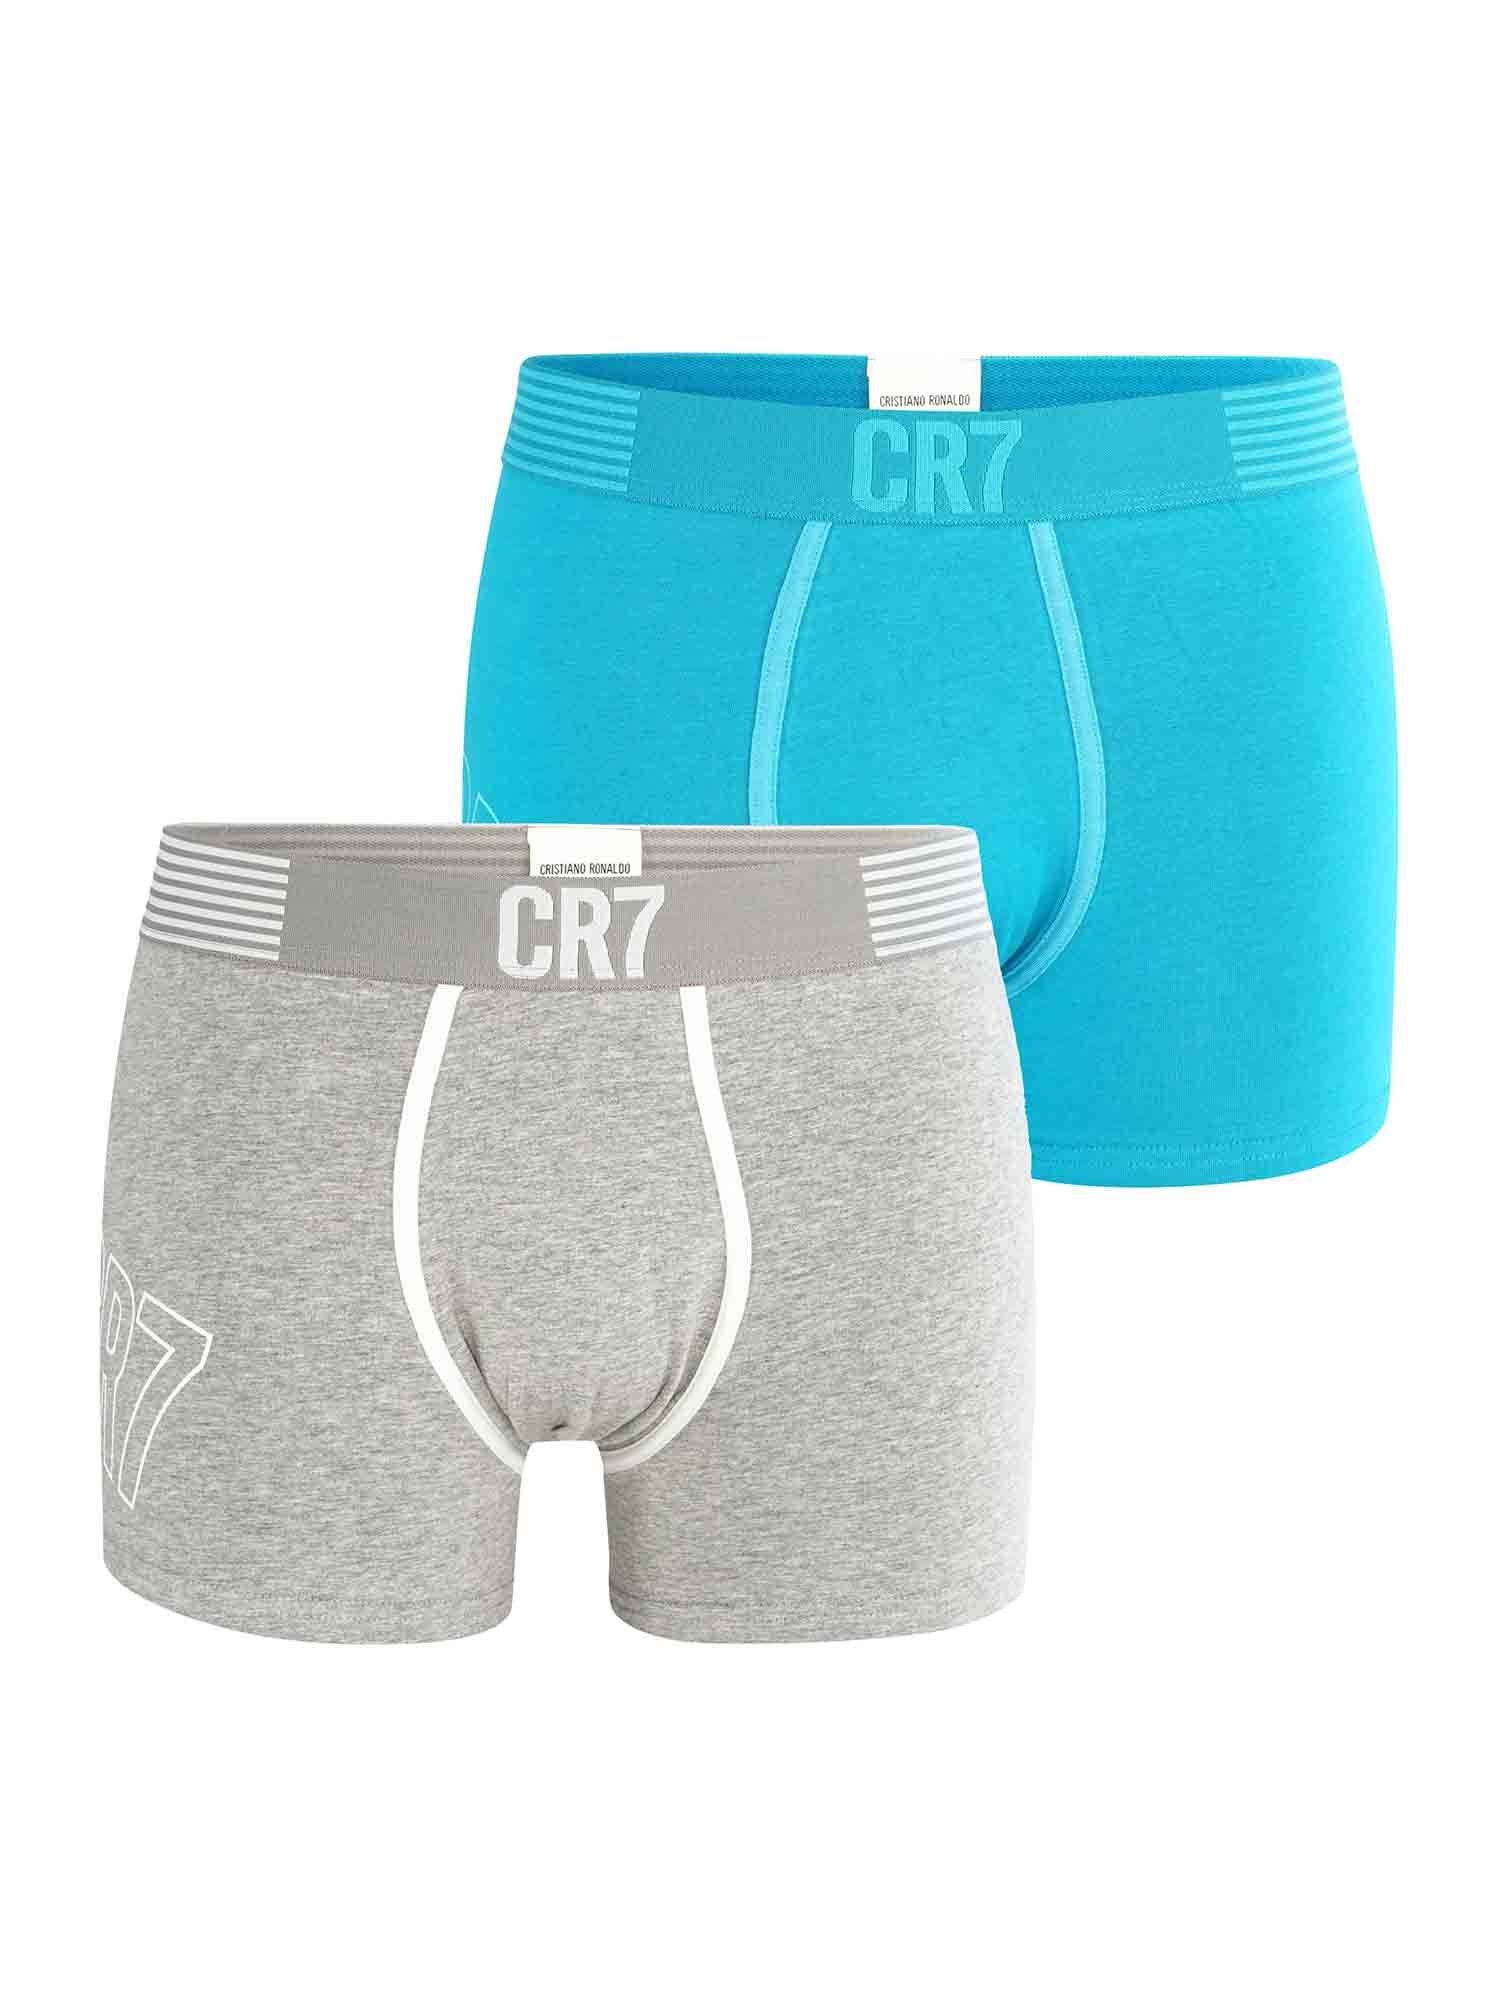 CR7 Retro Pants Herren Männer Boxershorts Retro Pants Trunks Multipack (2-St) Multi 10